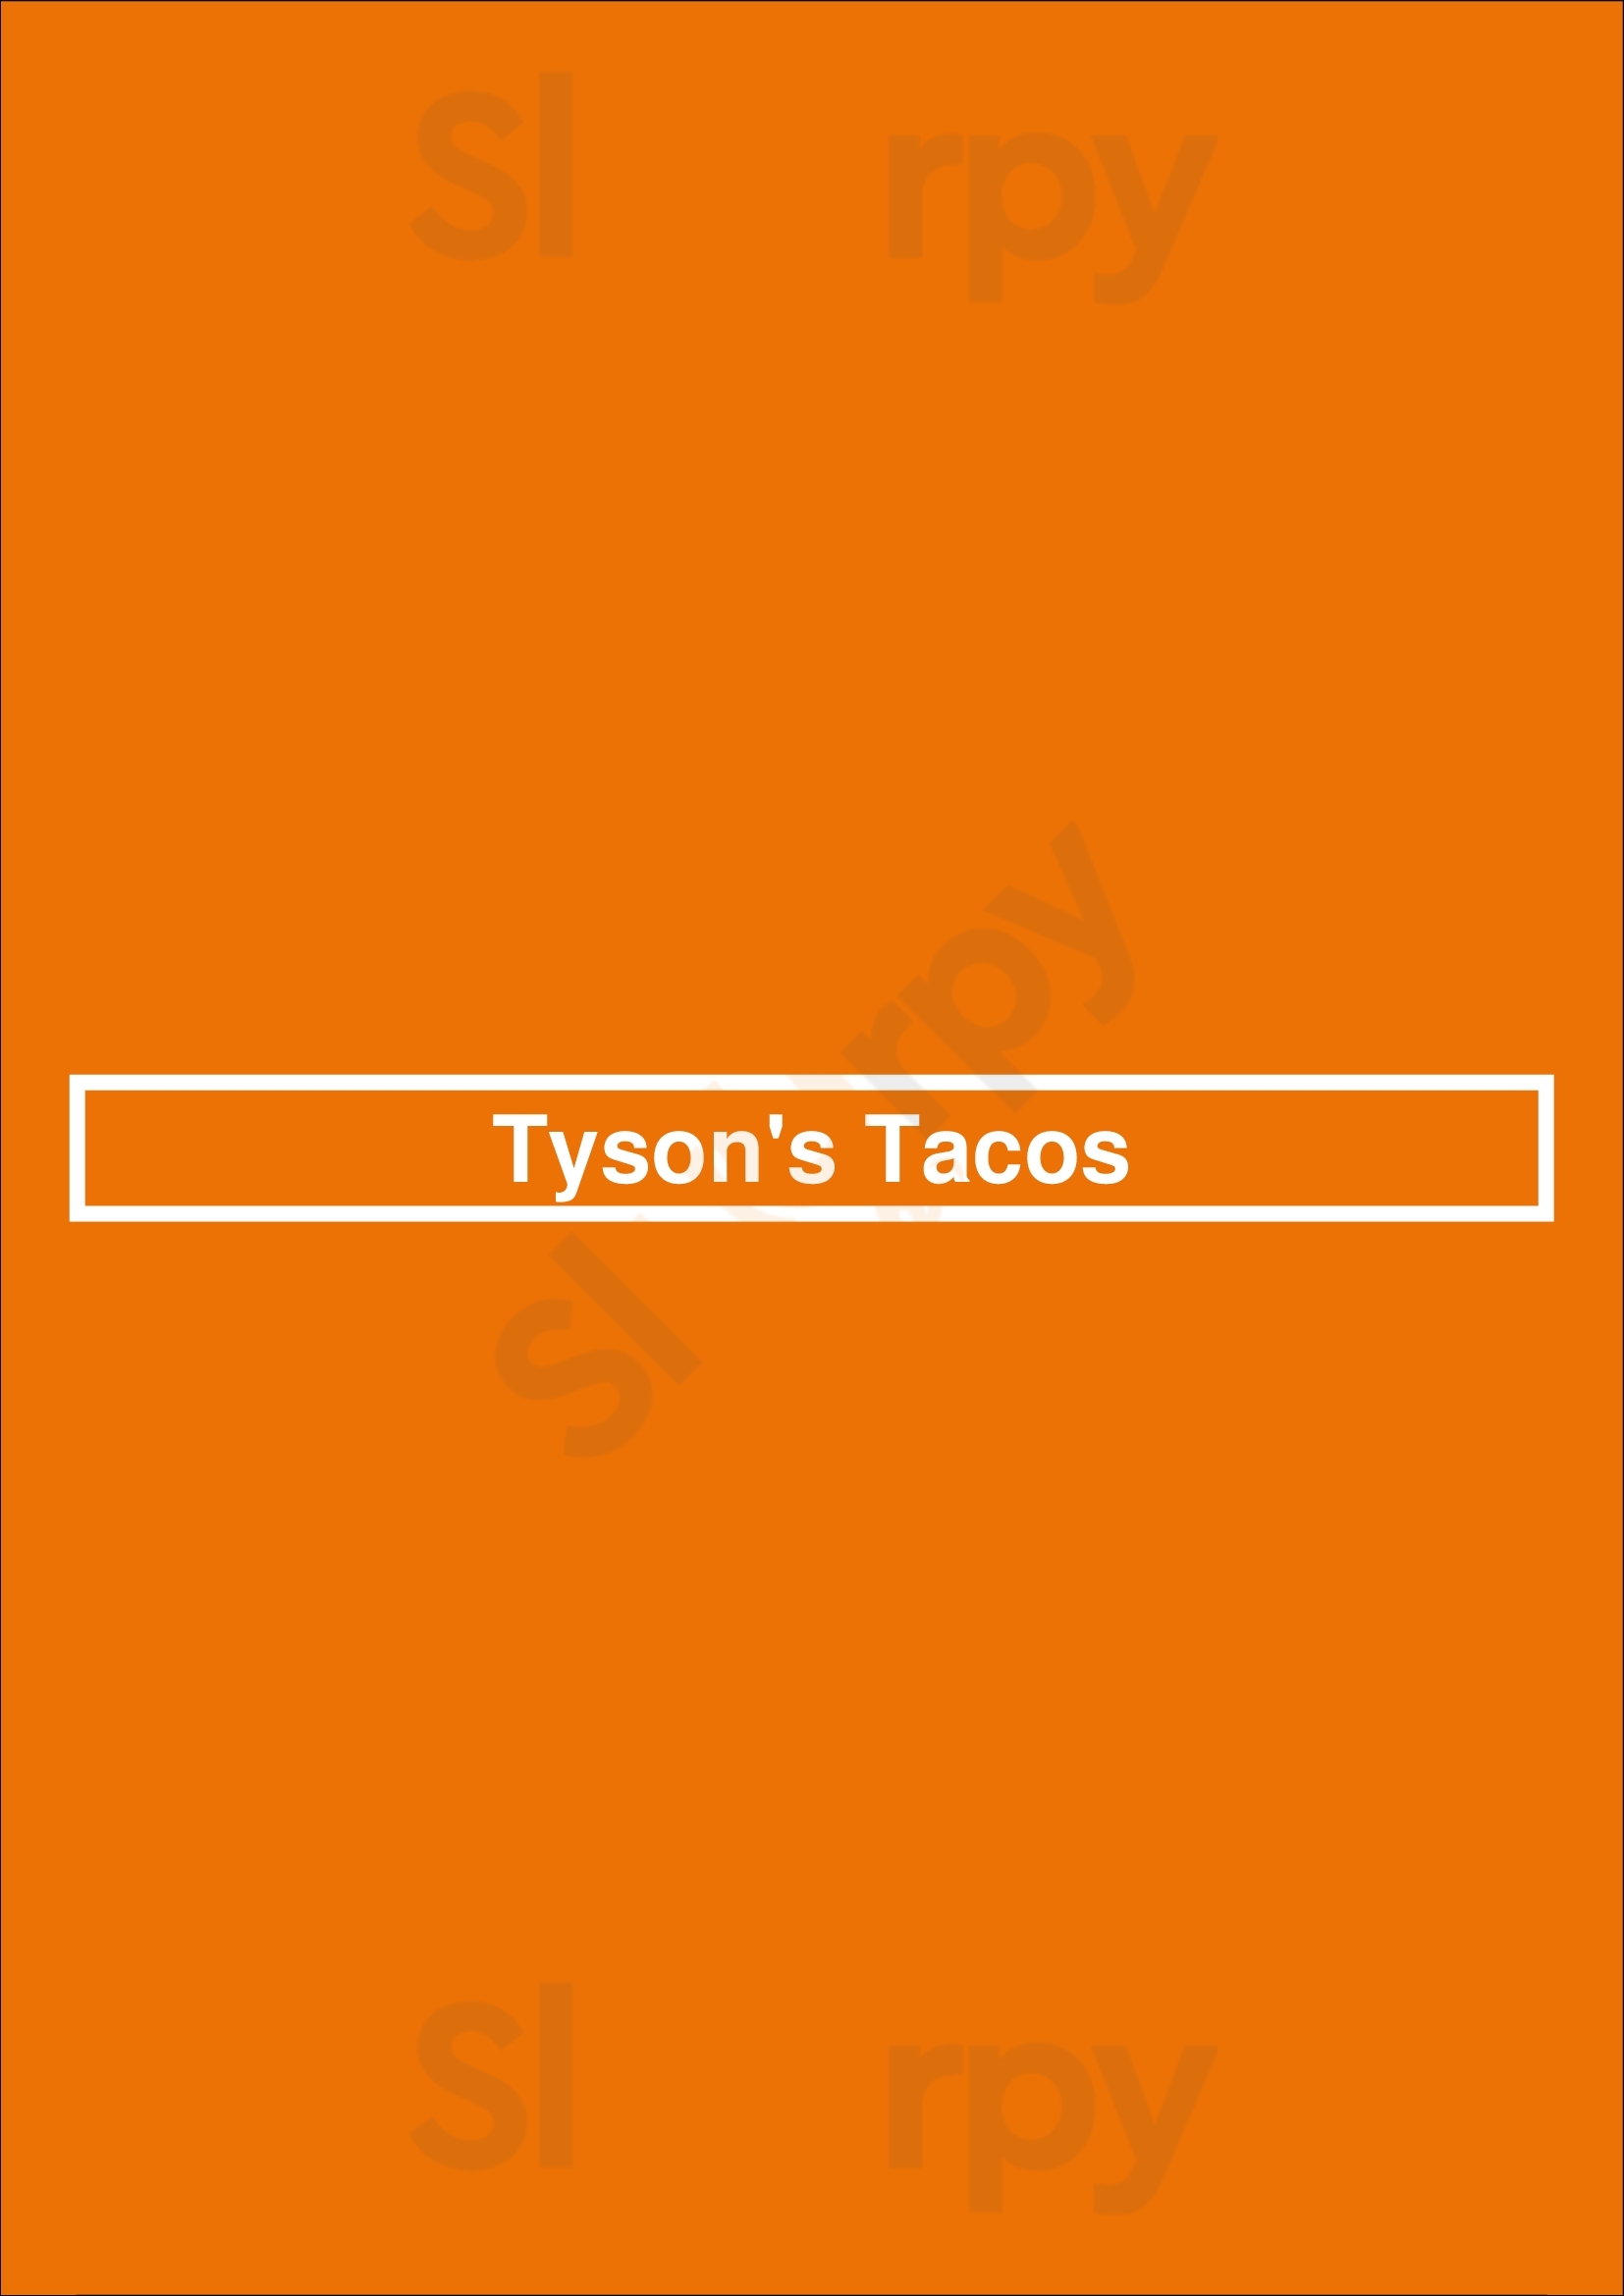 Tyson's Tacos Austin Menu - 1